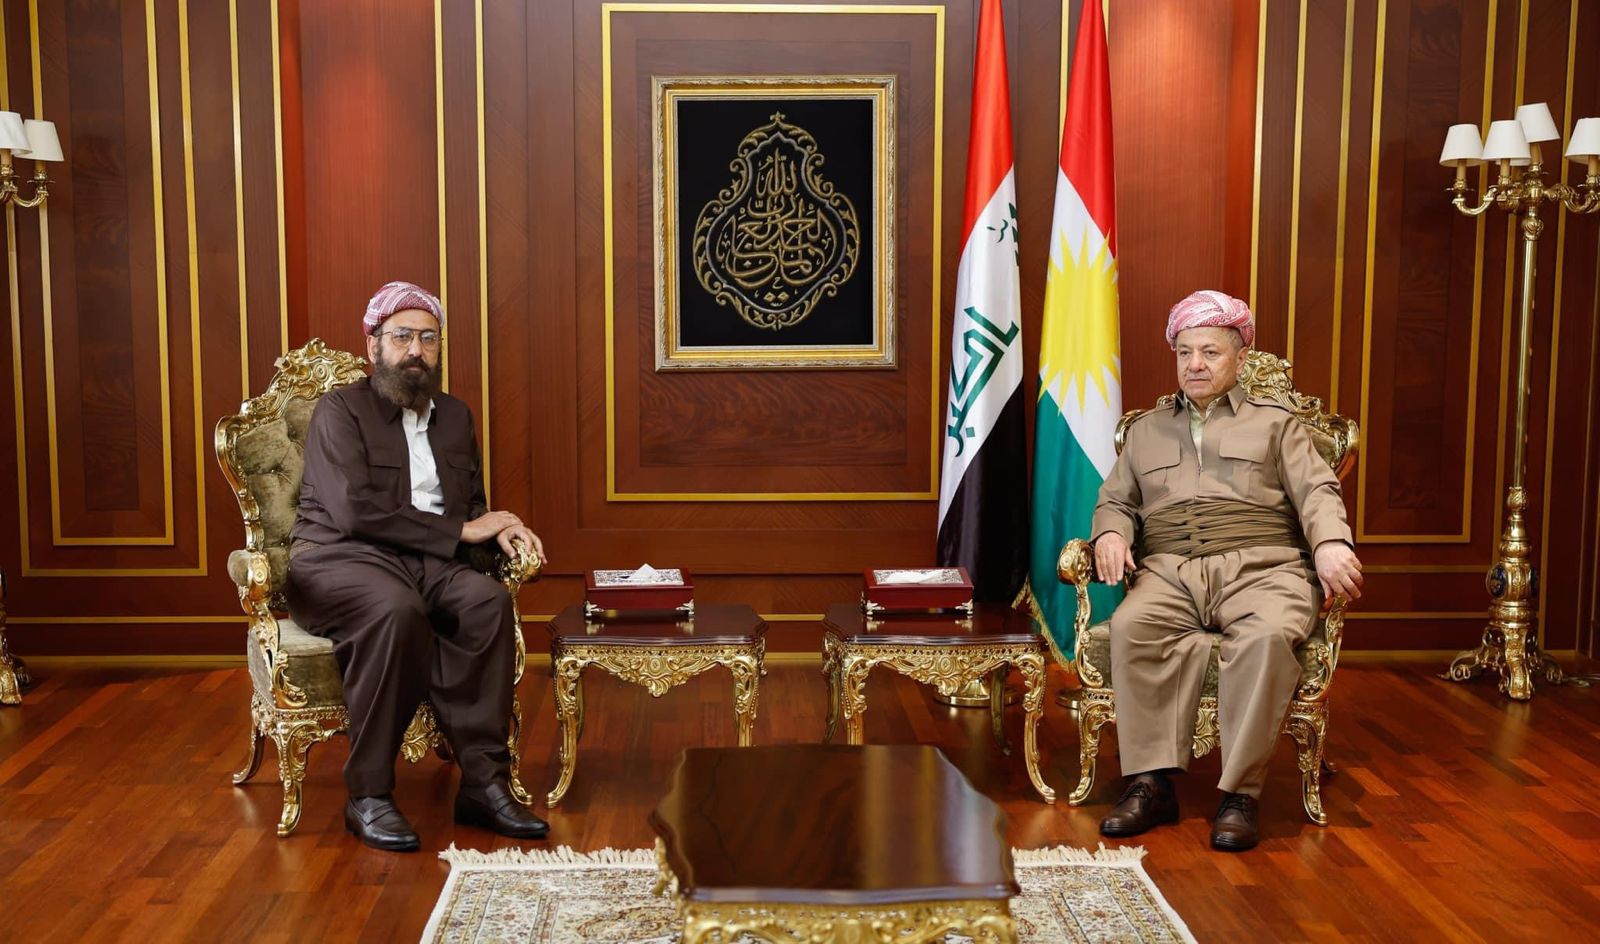 Leader Barzani affirms Yazidis integral role in Kurdistan